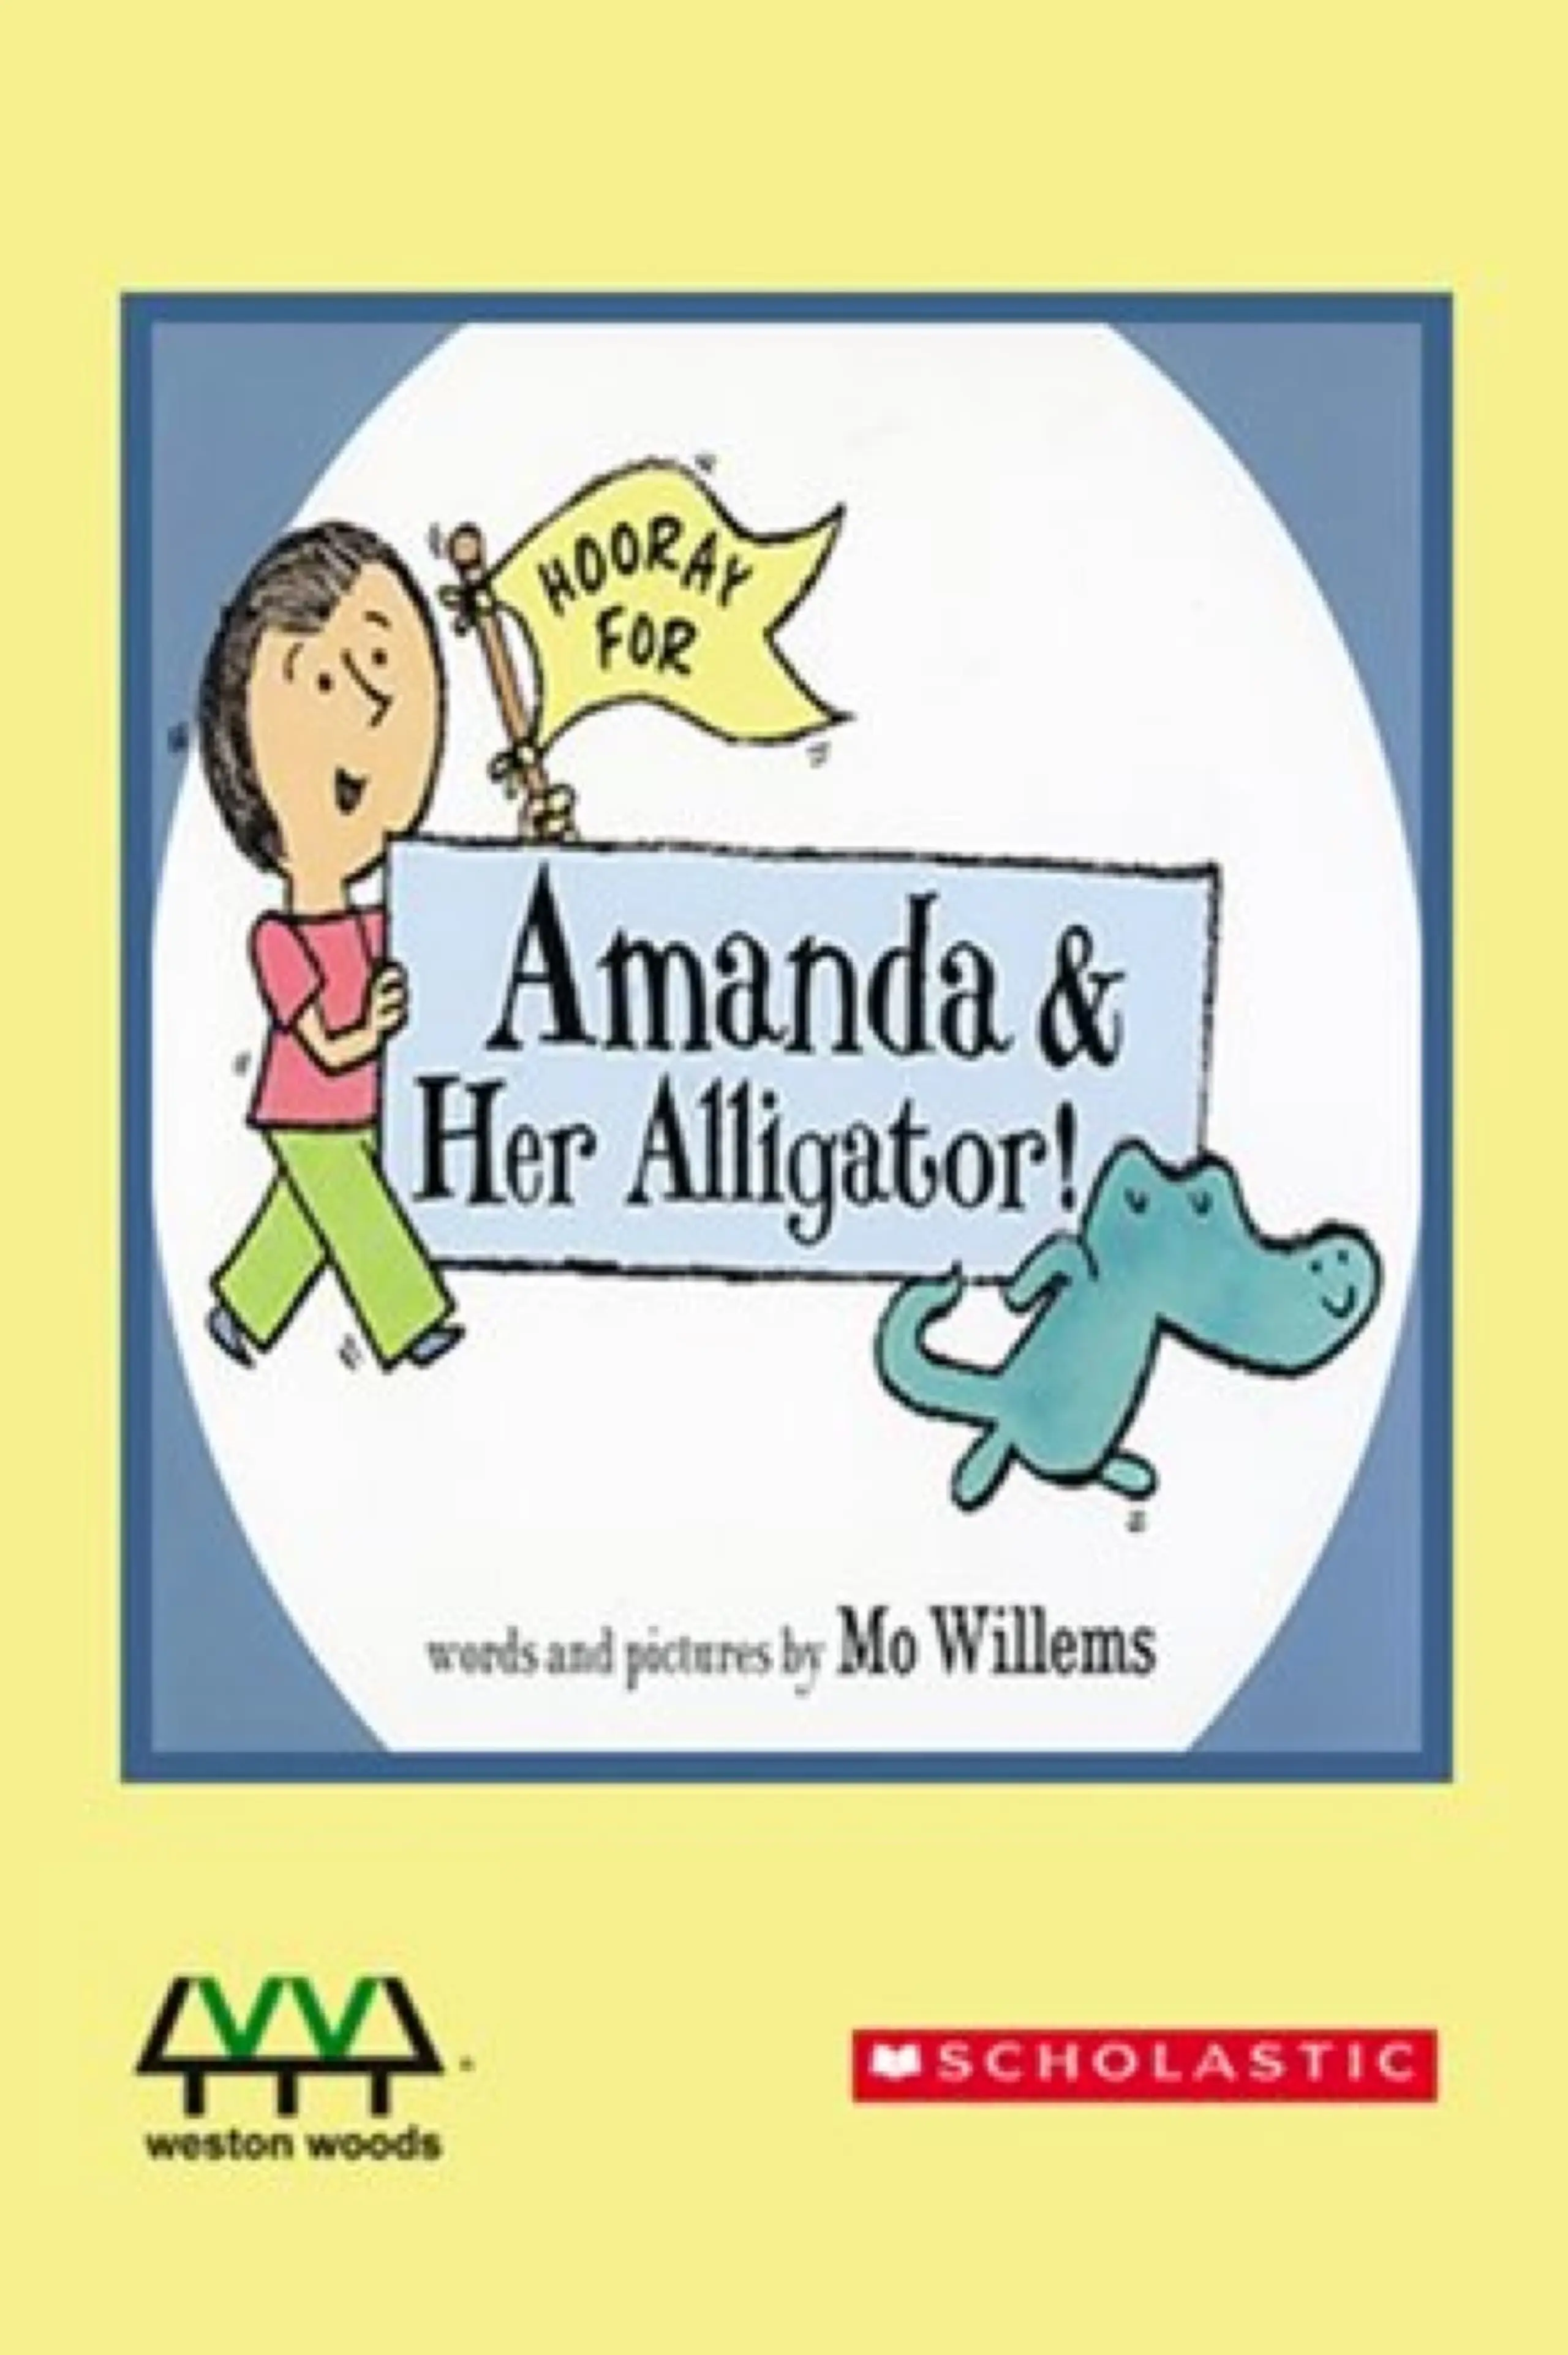 Hooray For Amanda And Her Alligator